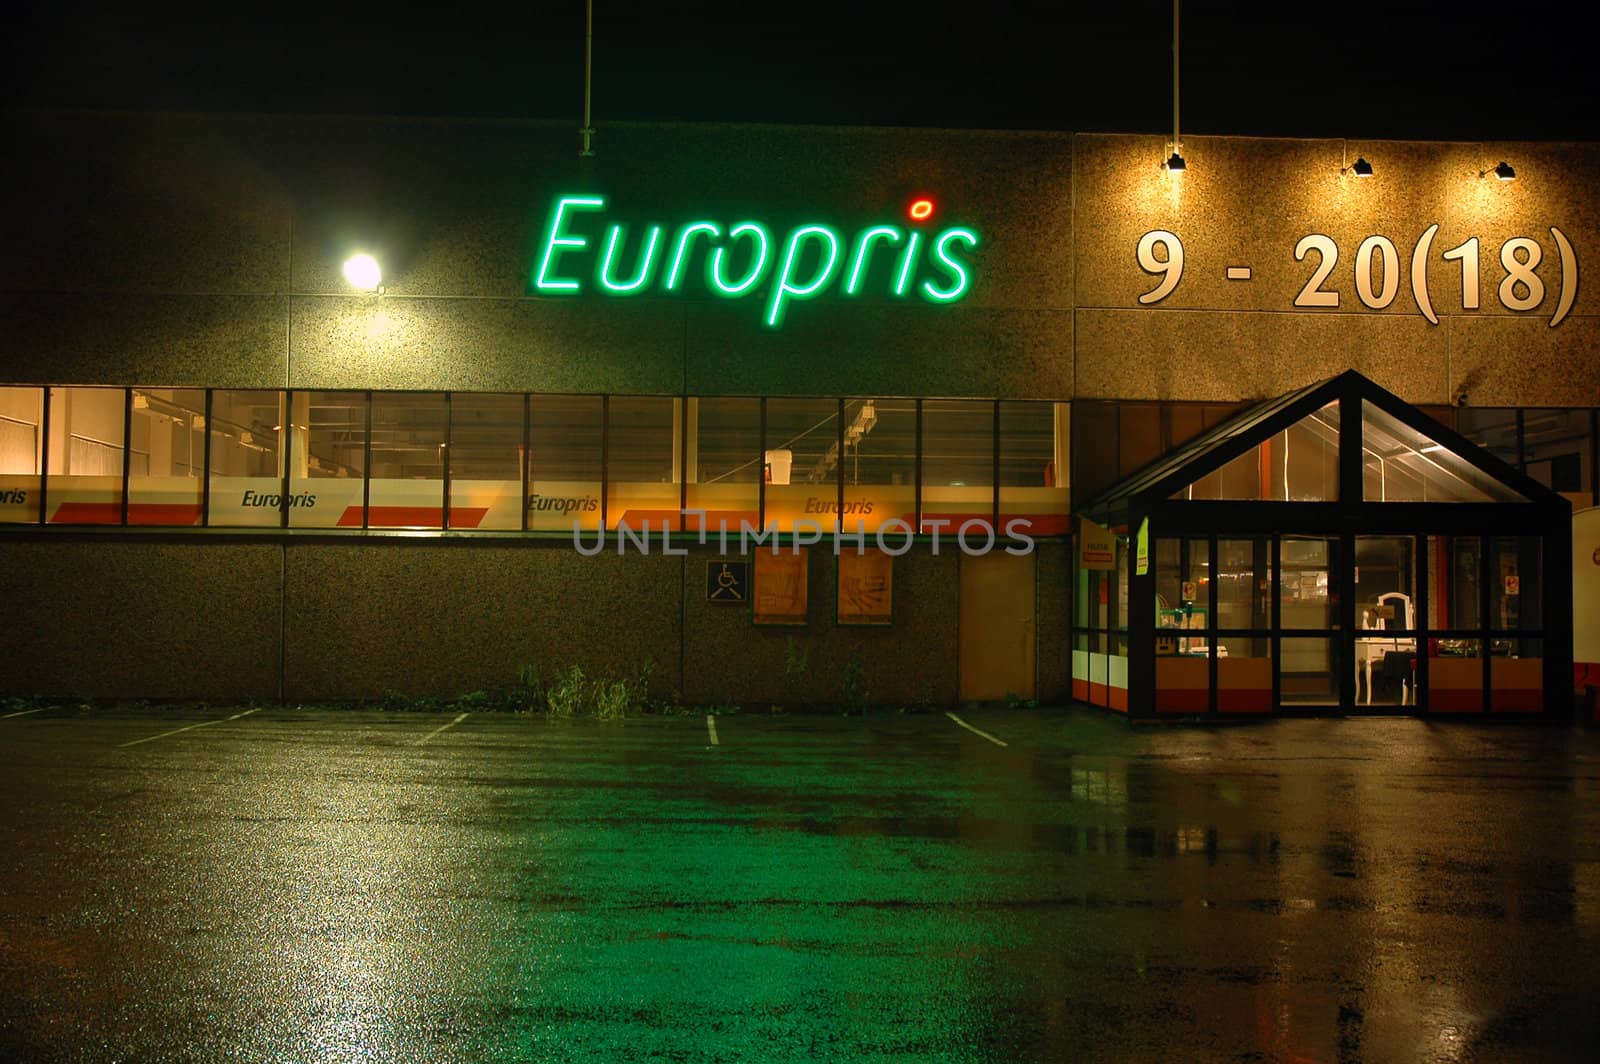 Europris. Norwegian shop. Nightshoot.
Bommestad, Larvik, Norway - 2006.